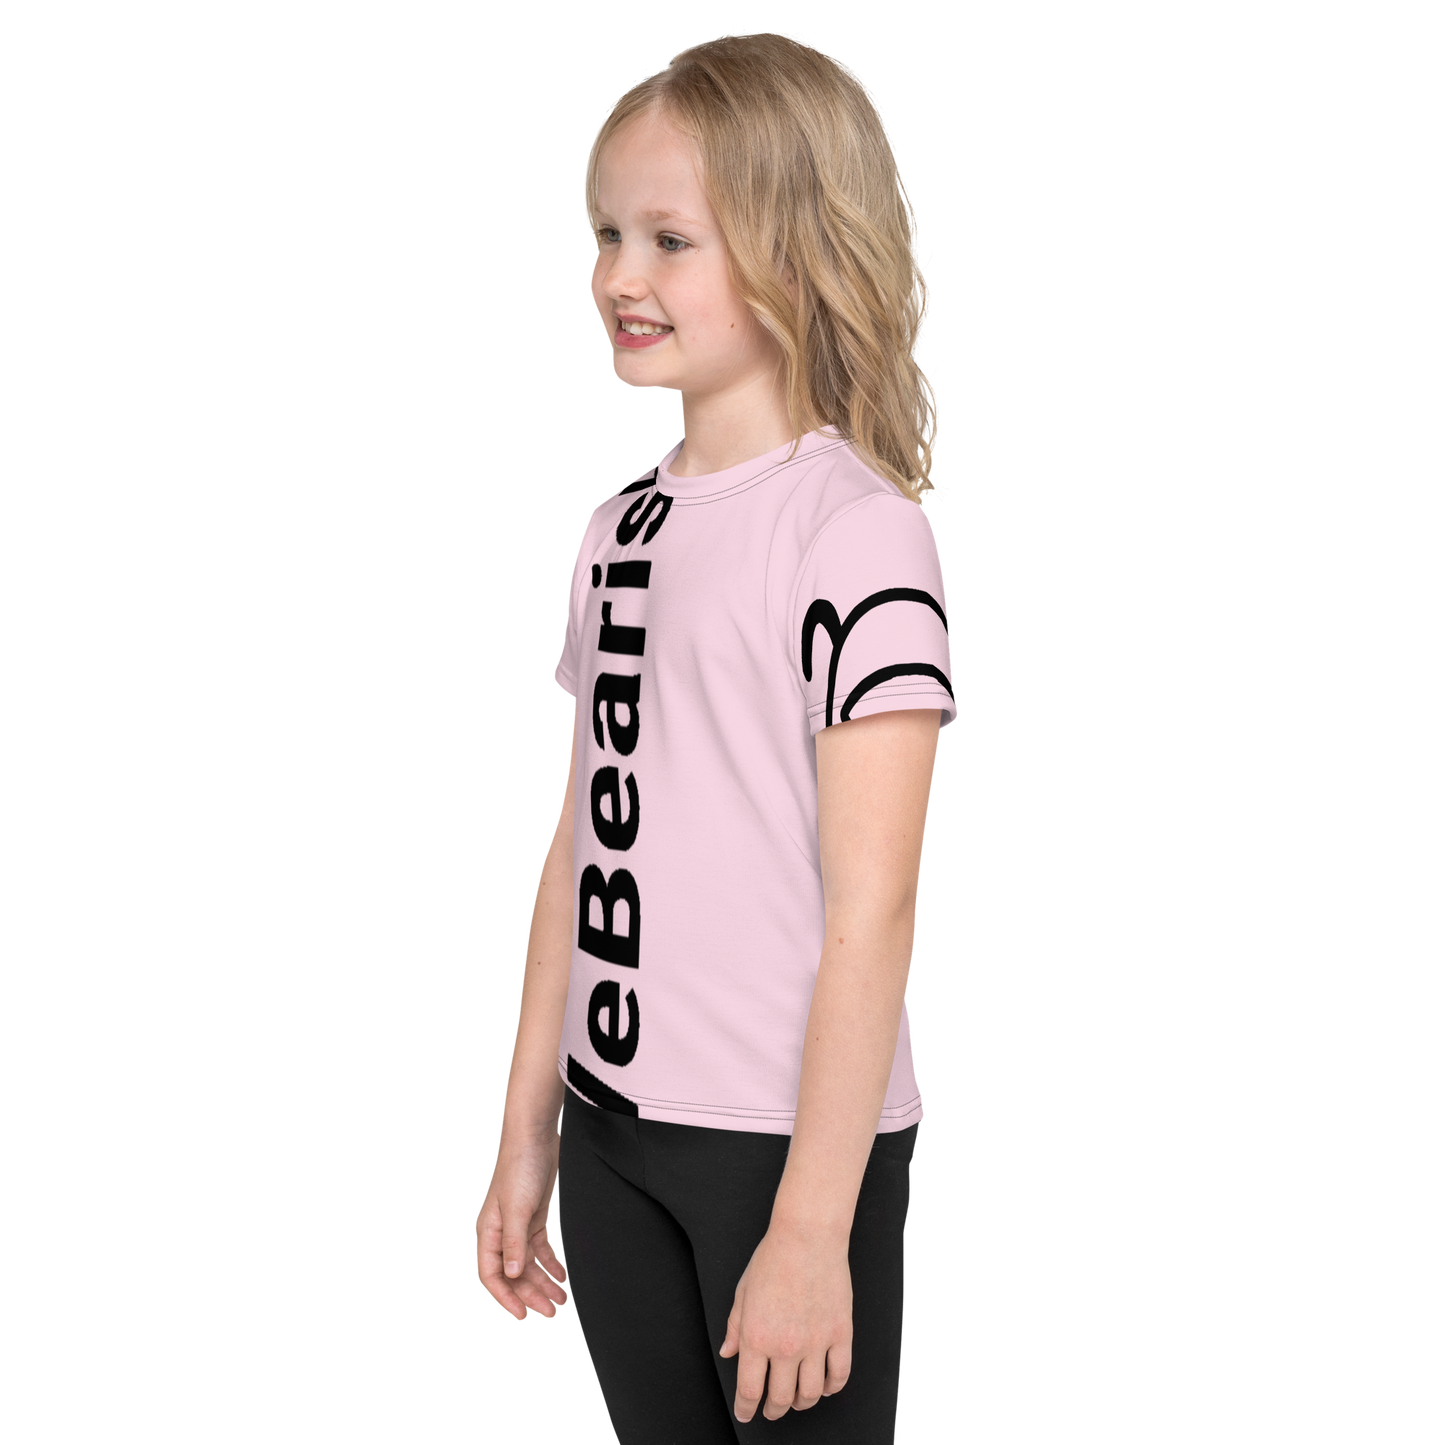 WeBearish Kid's T-shirt (Pink/Black)